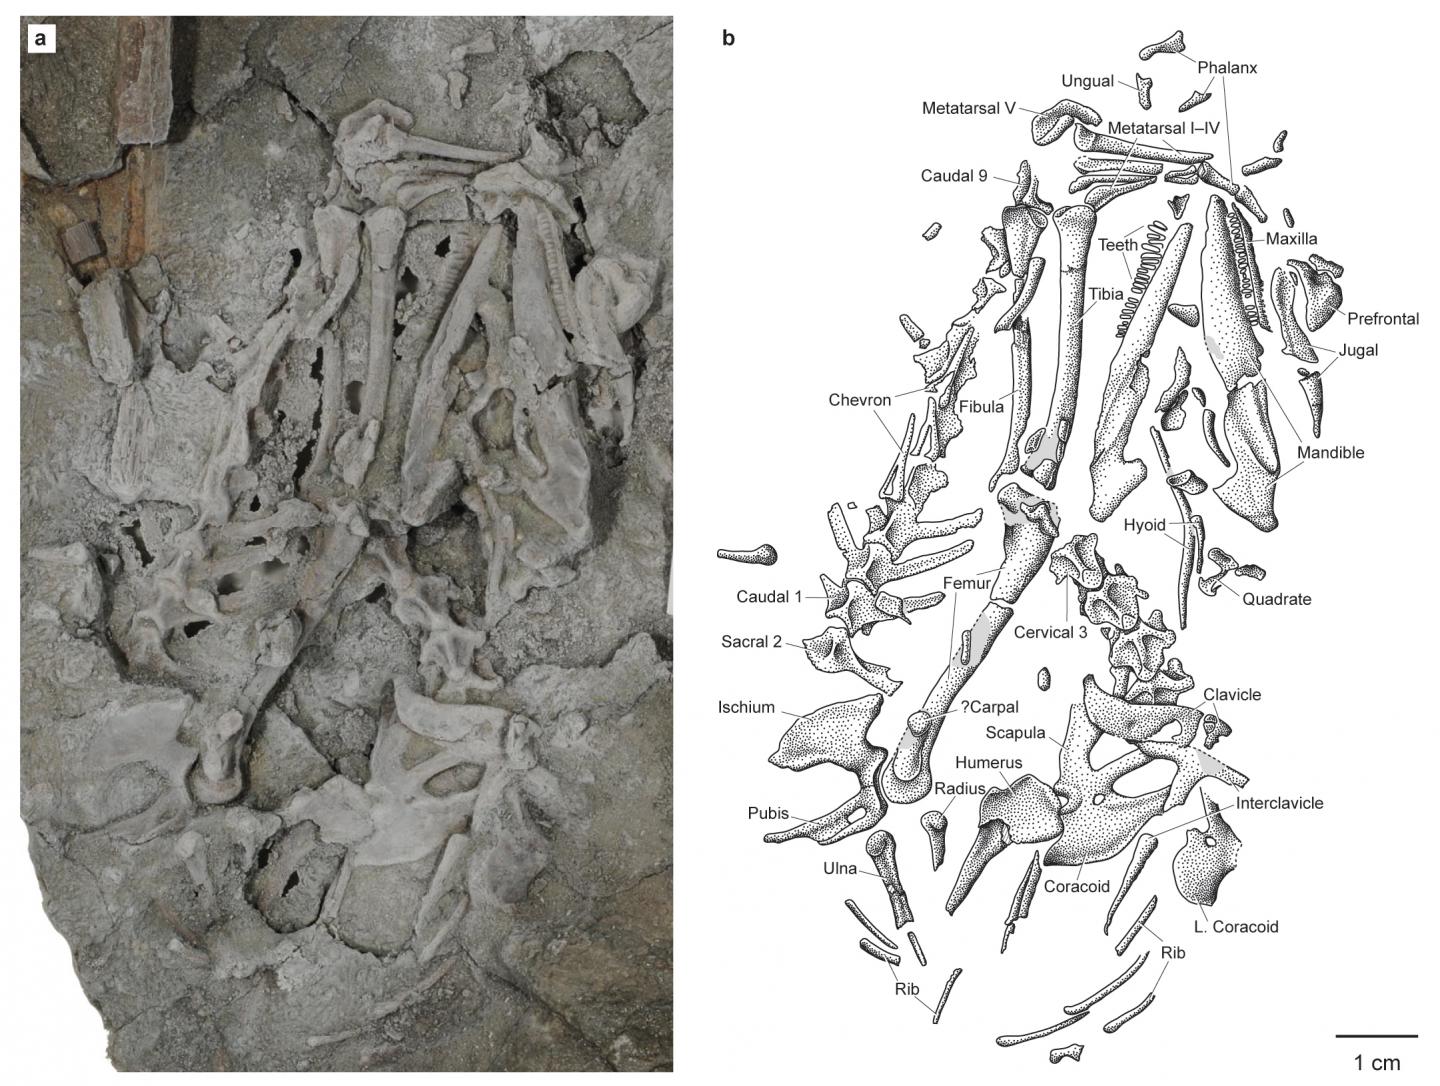 <i>Magnuviator</i> Fossil with Sketch